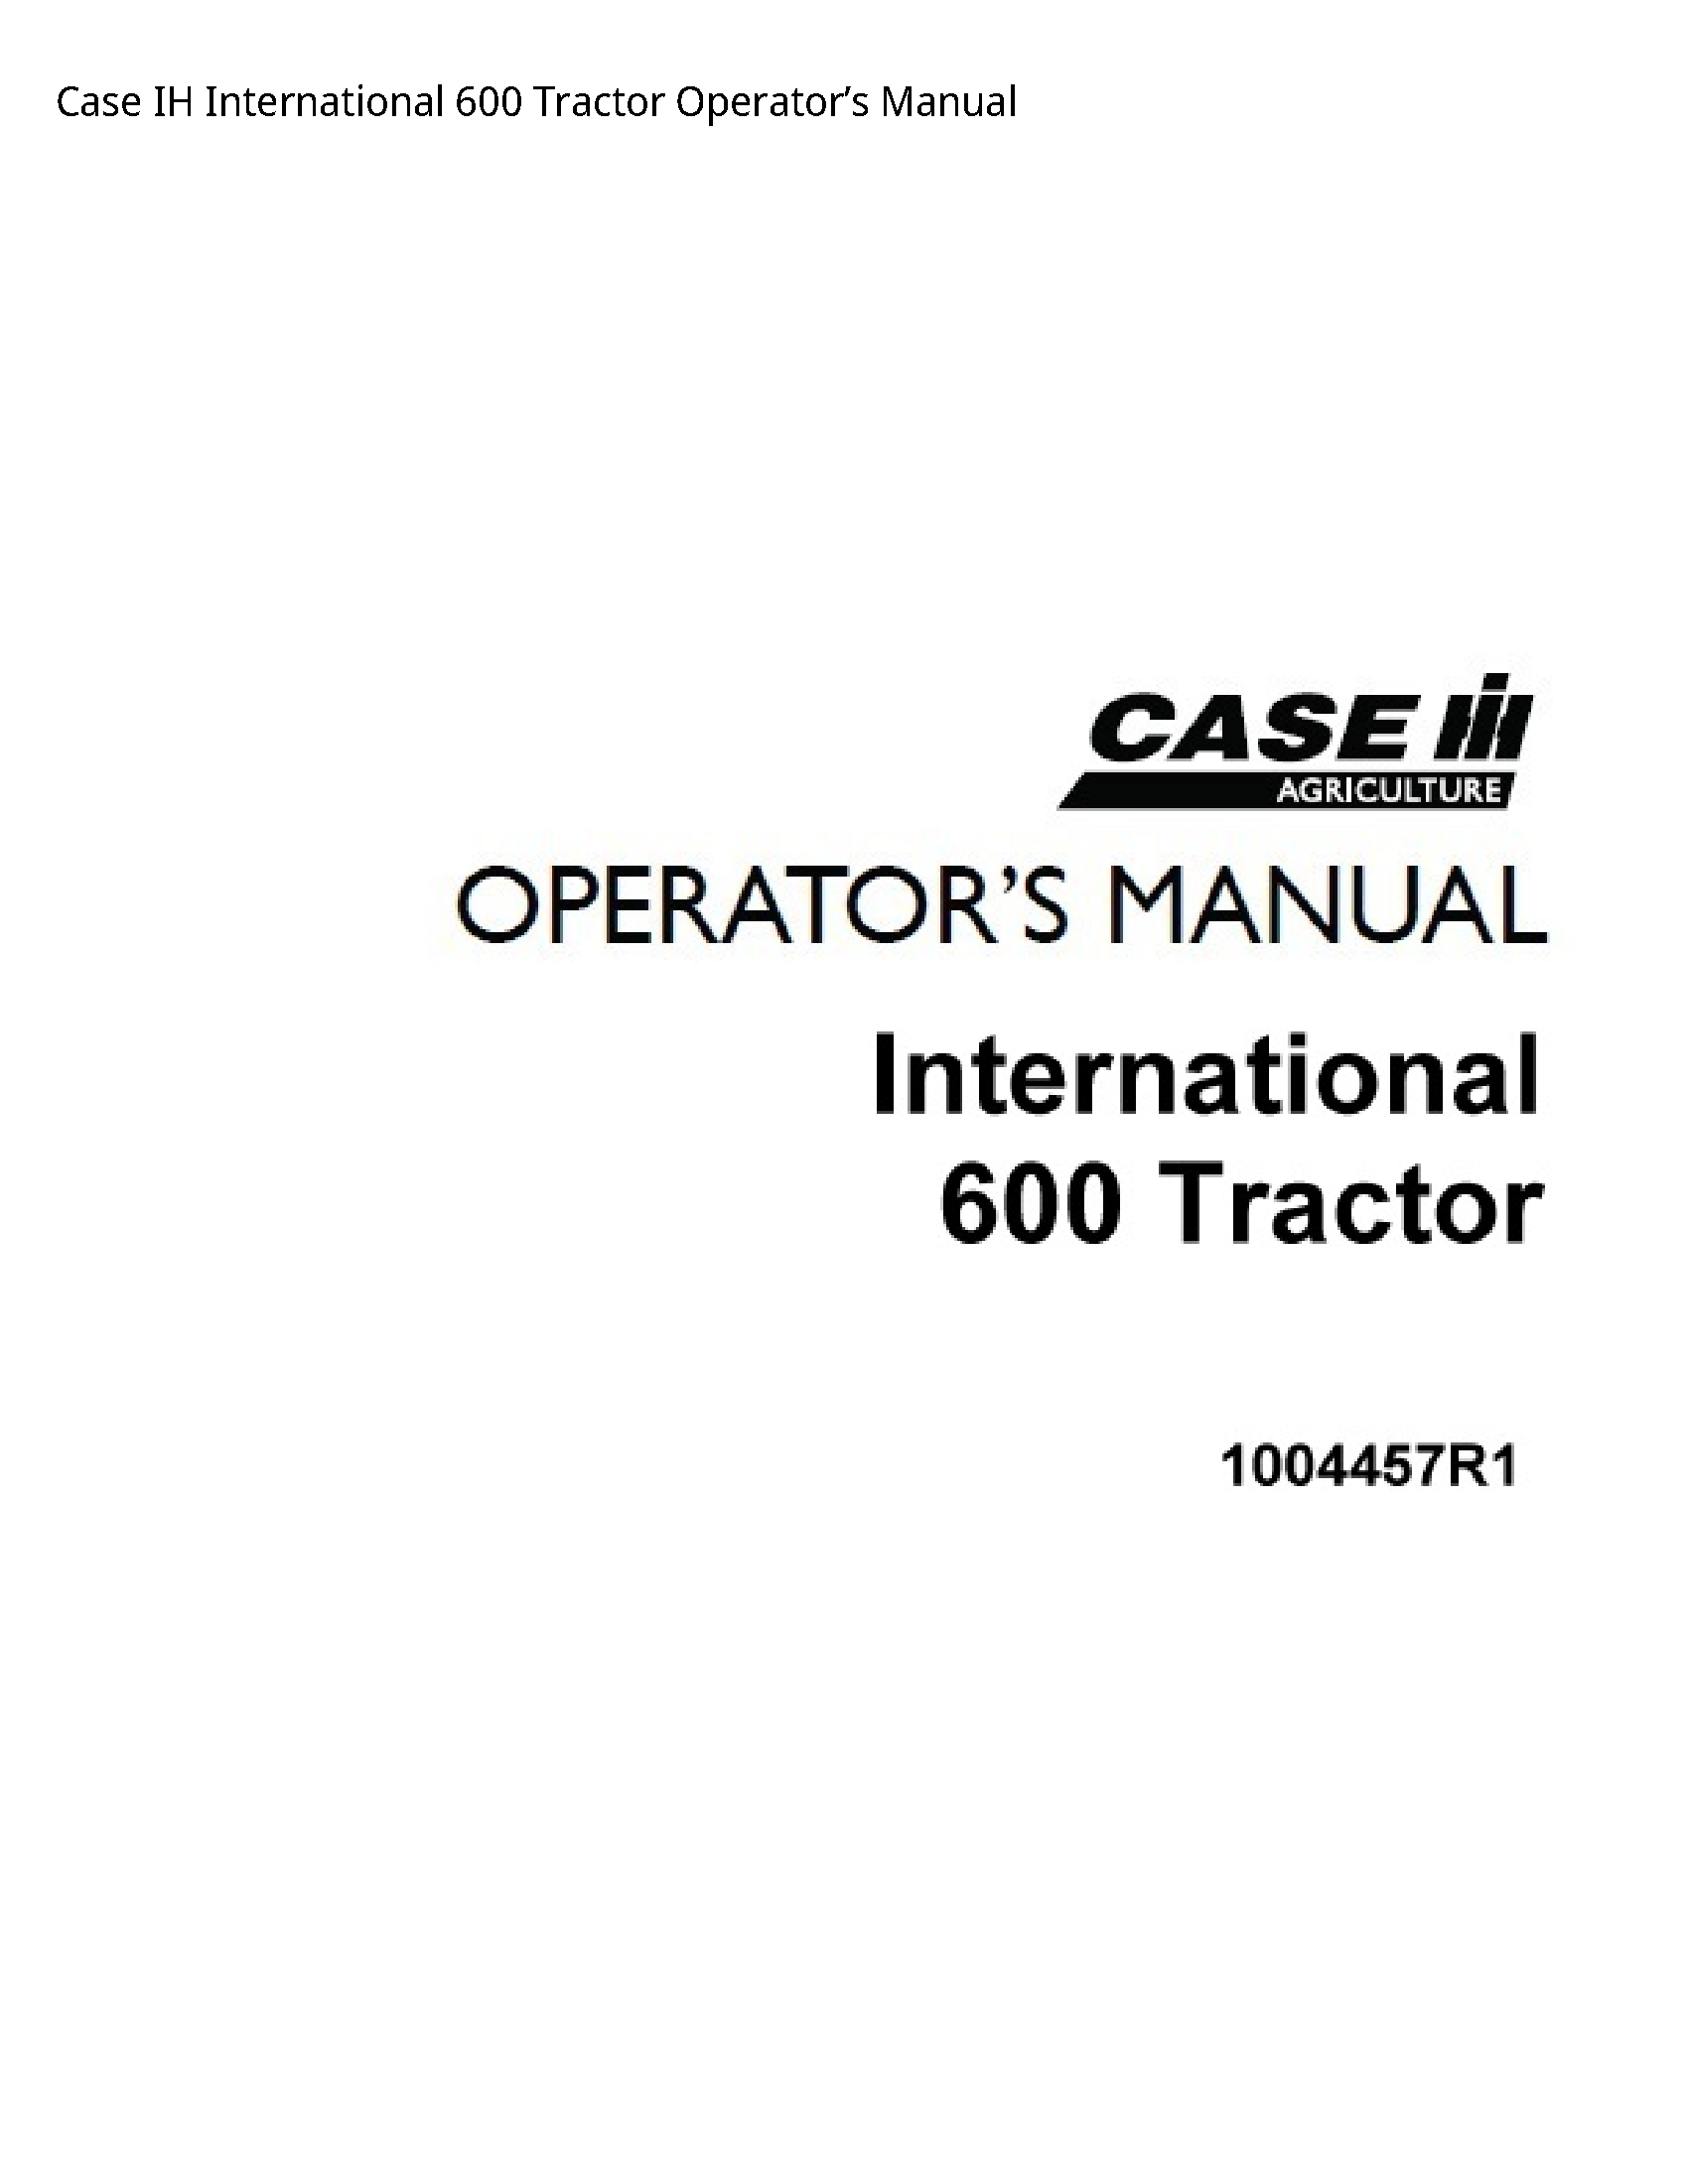 Case/Case IH 600 IH International Tractor Operator’s manual